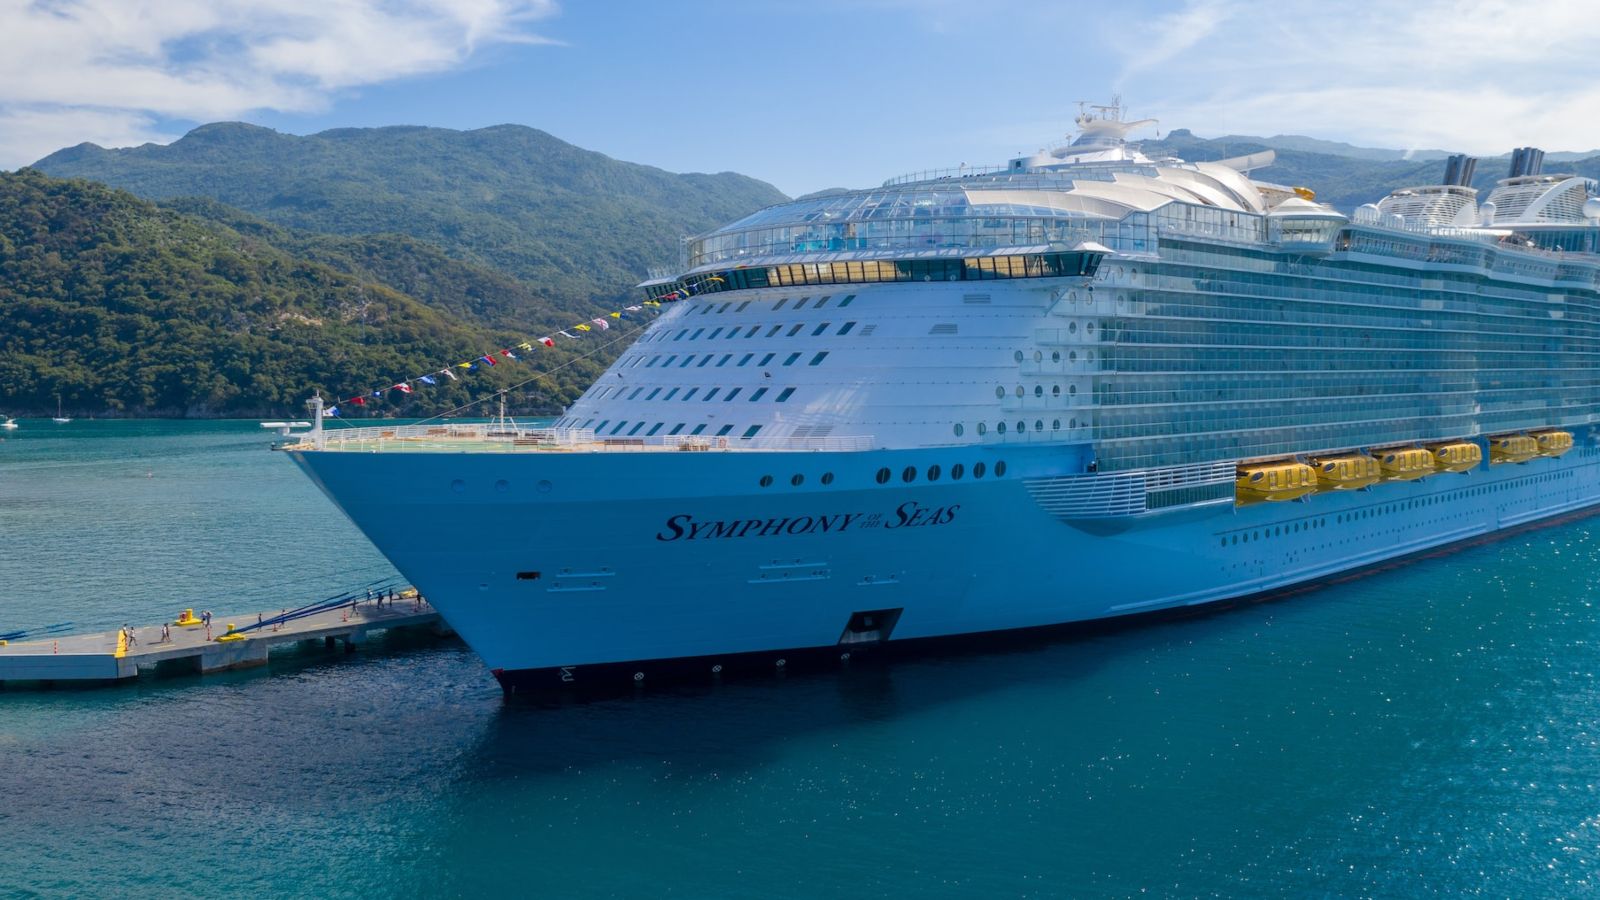 Royal Caribbean Symphony of the Seas cruise ship - Point Hacks